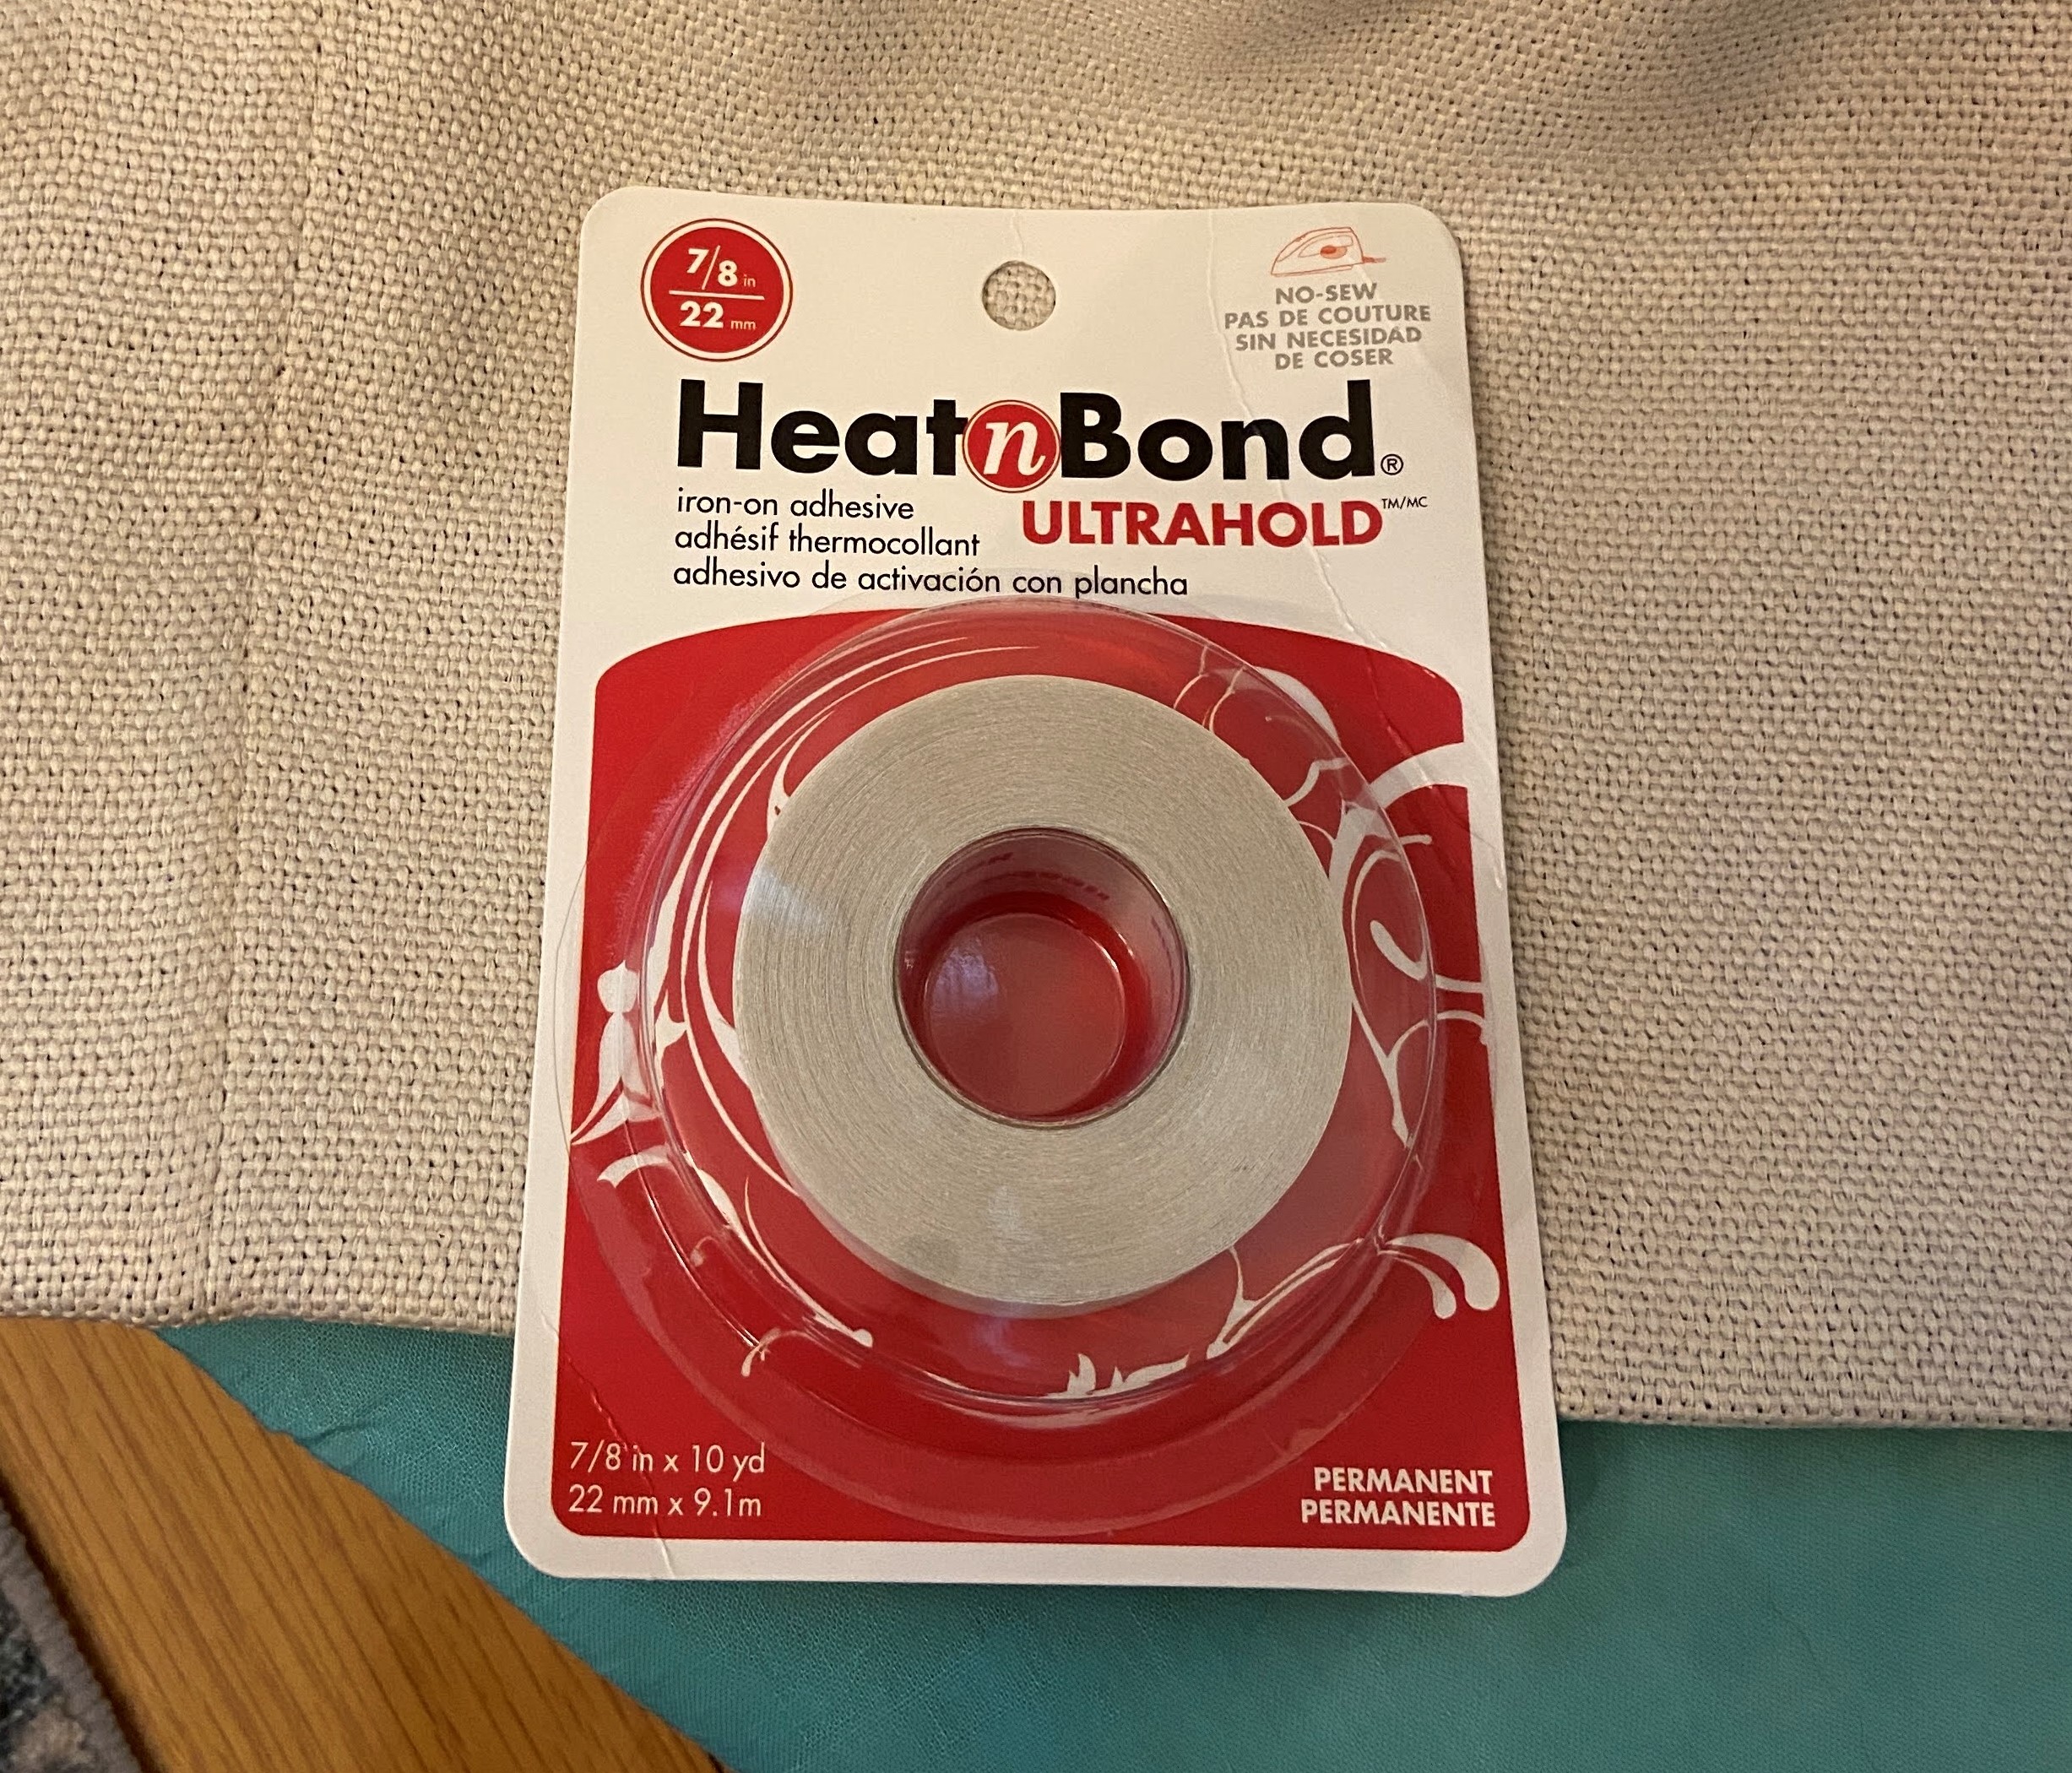 HeatnBond UltraHold Iron-On Adhesive Tape For Dark Fabrics, 7/8 in x 10 yds